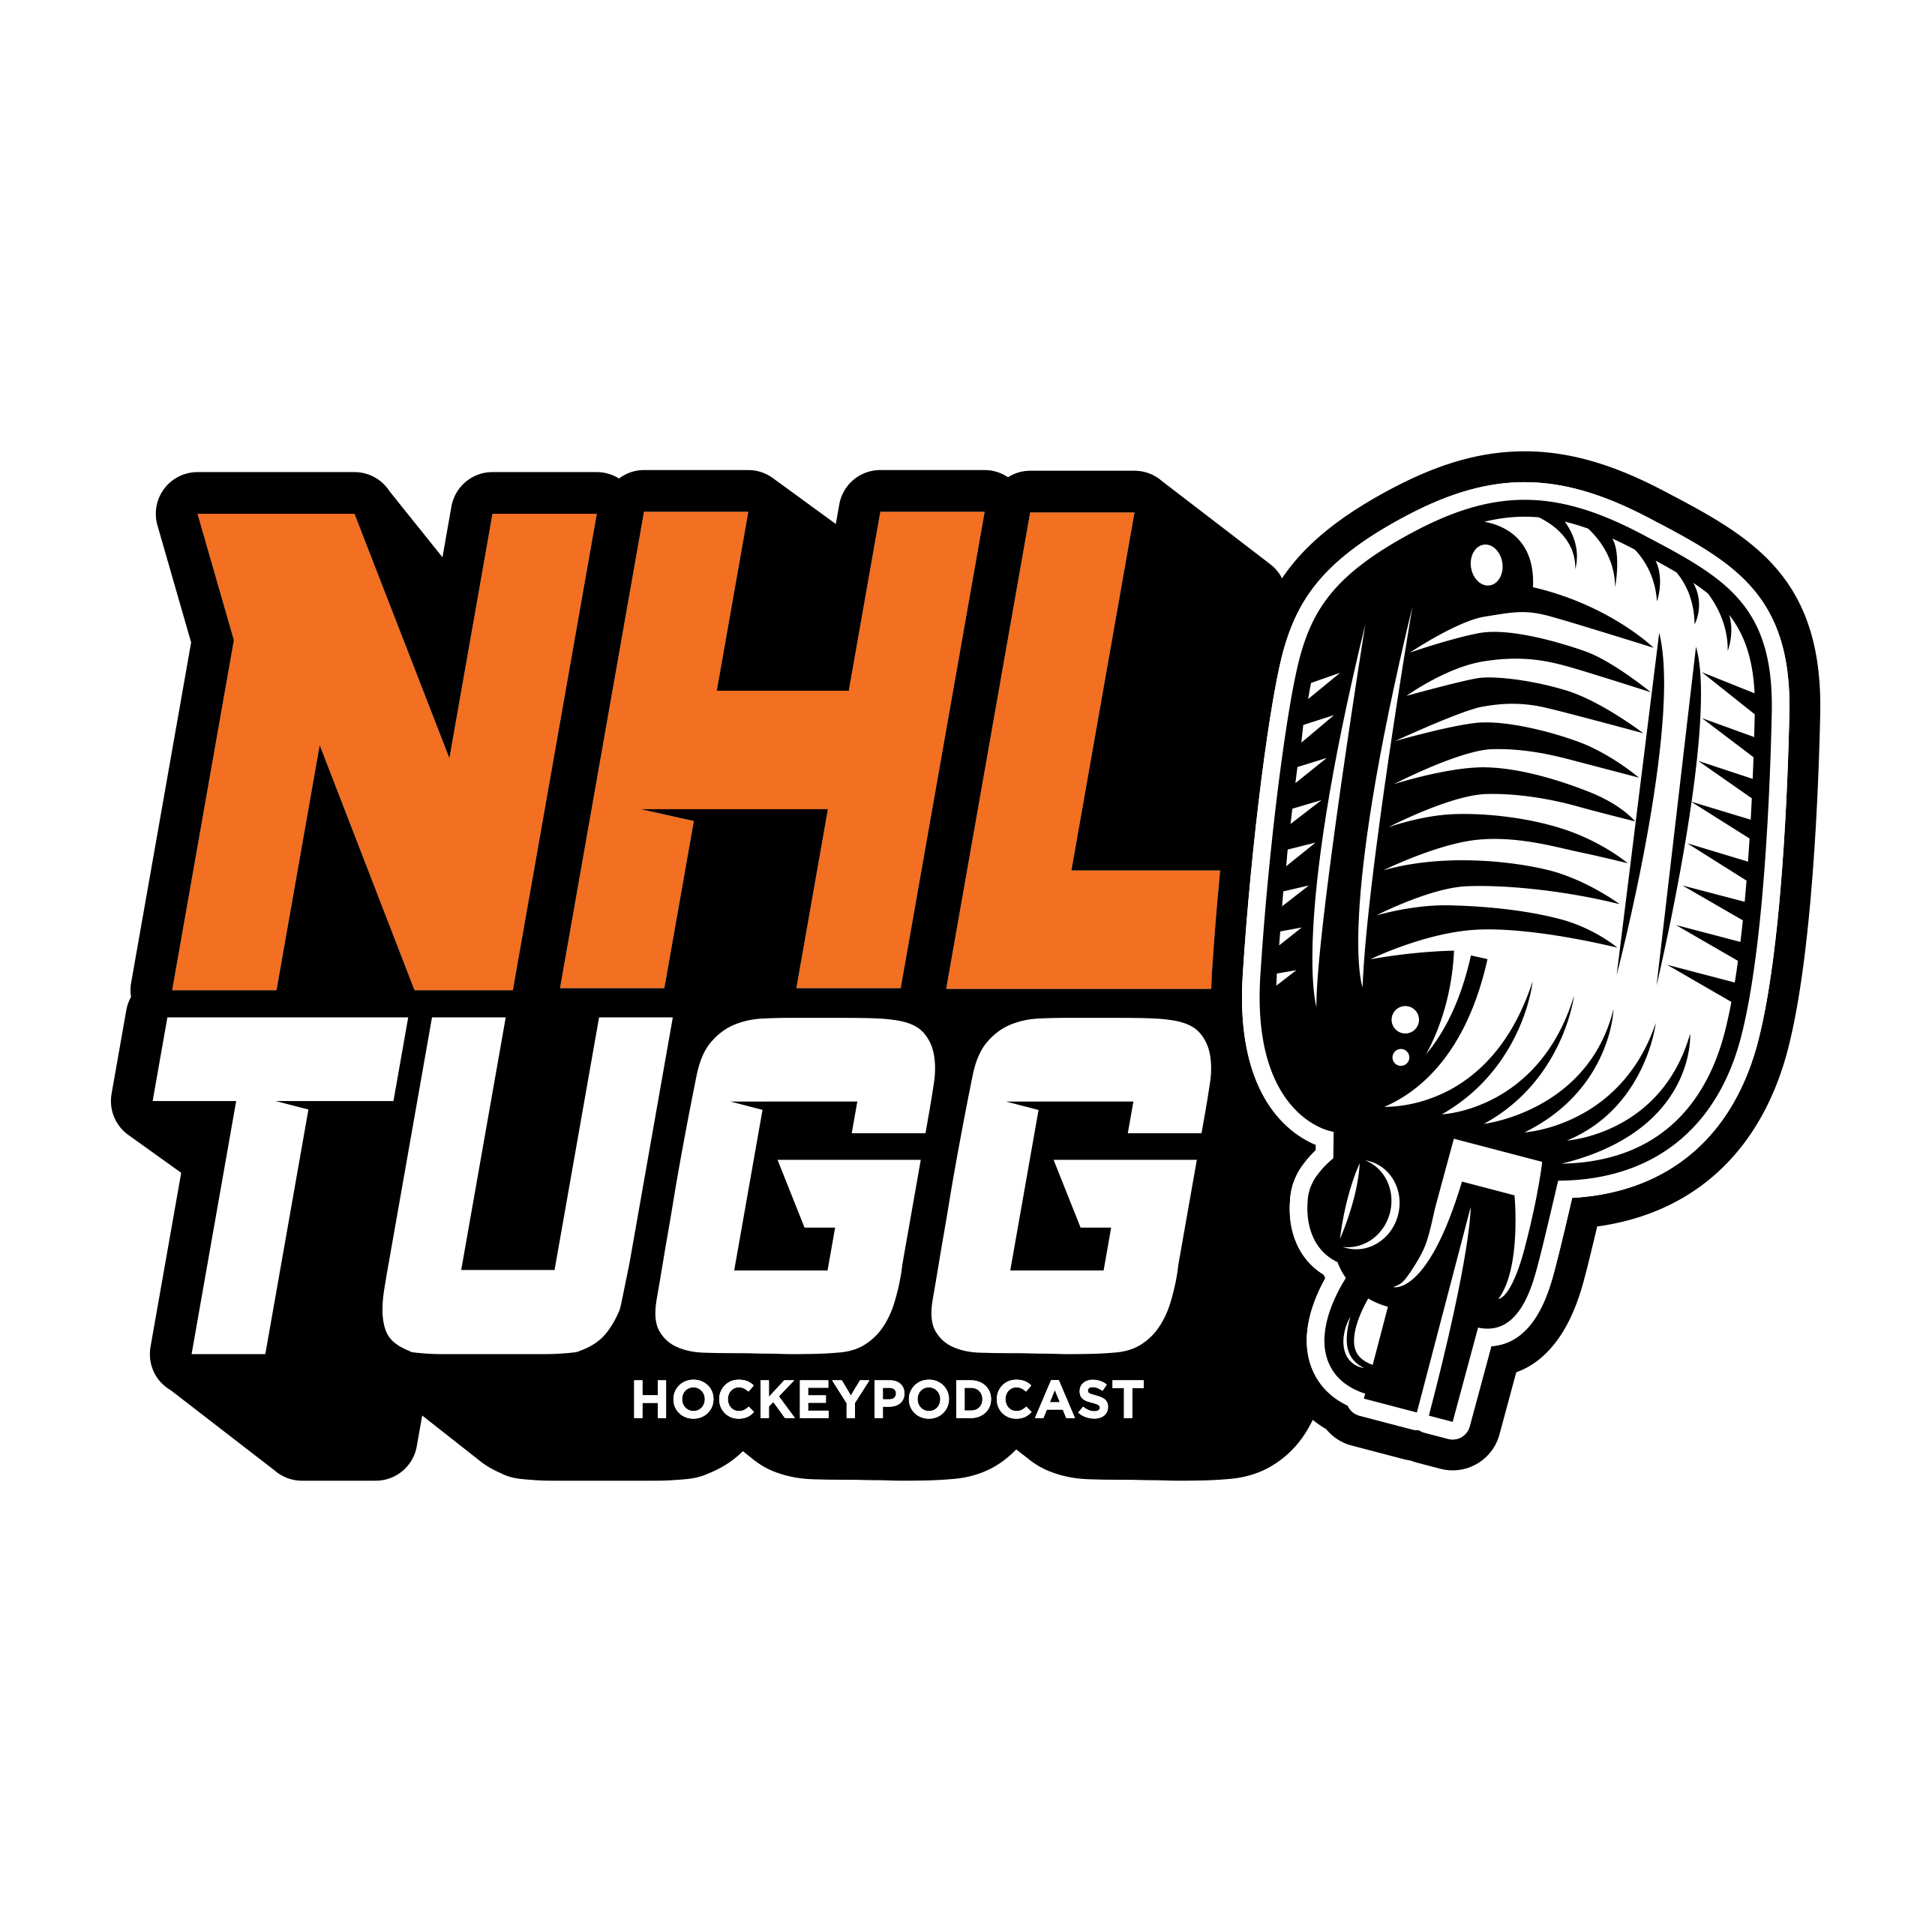 NHL-Tugg avsnitt 97 ”Konspirationsteorier”